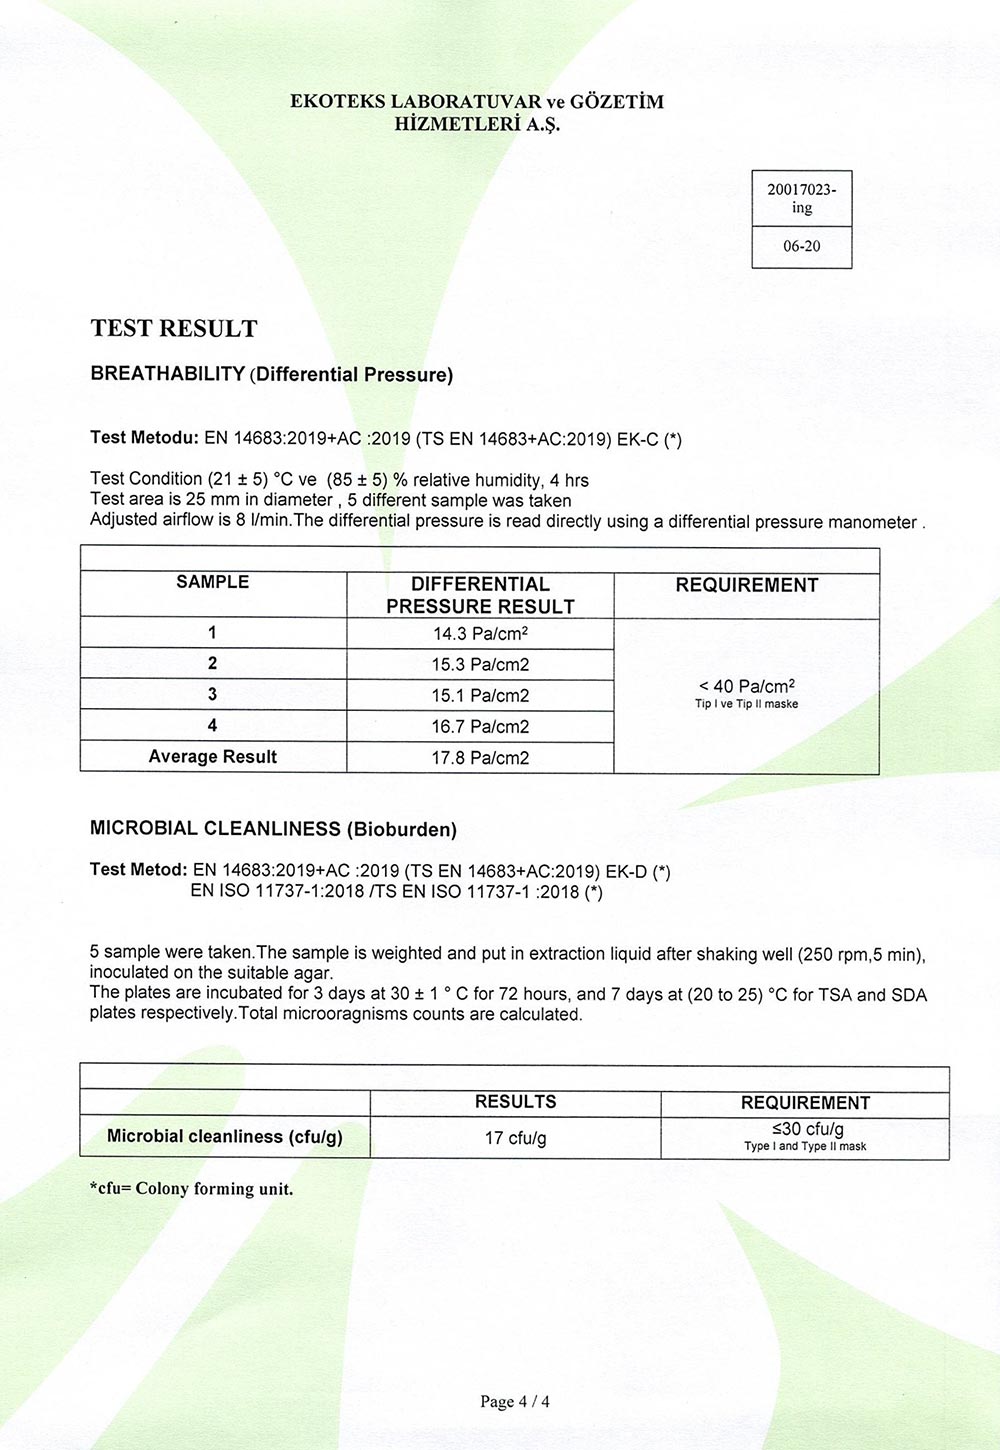 Certificate-Ekoteks-Test-Report-I-4